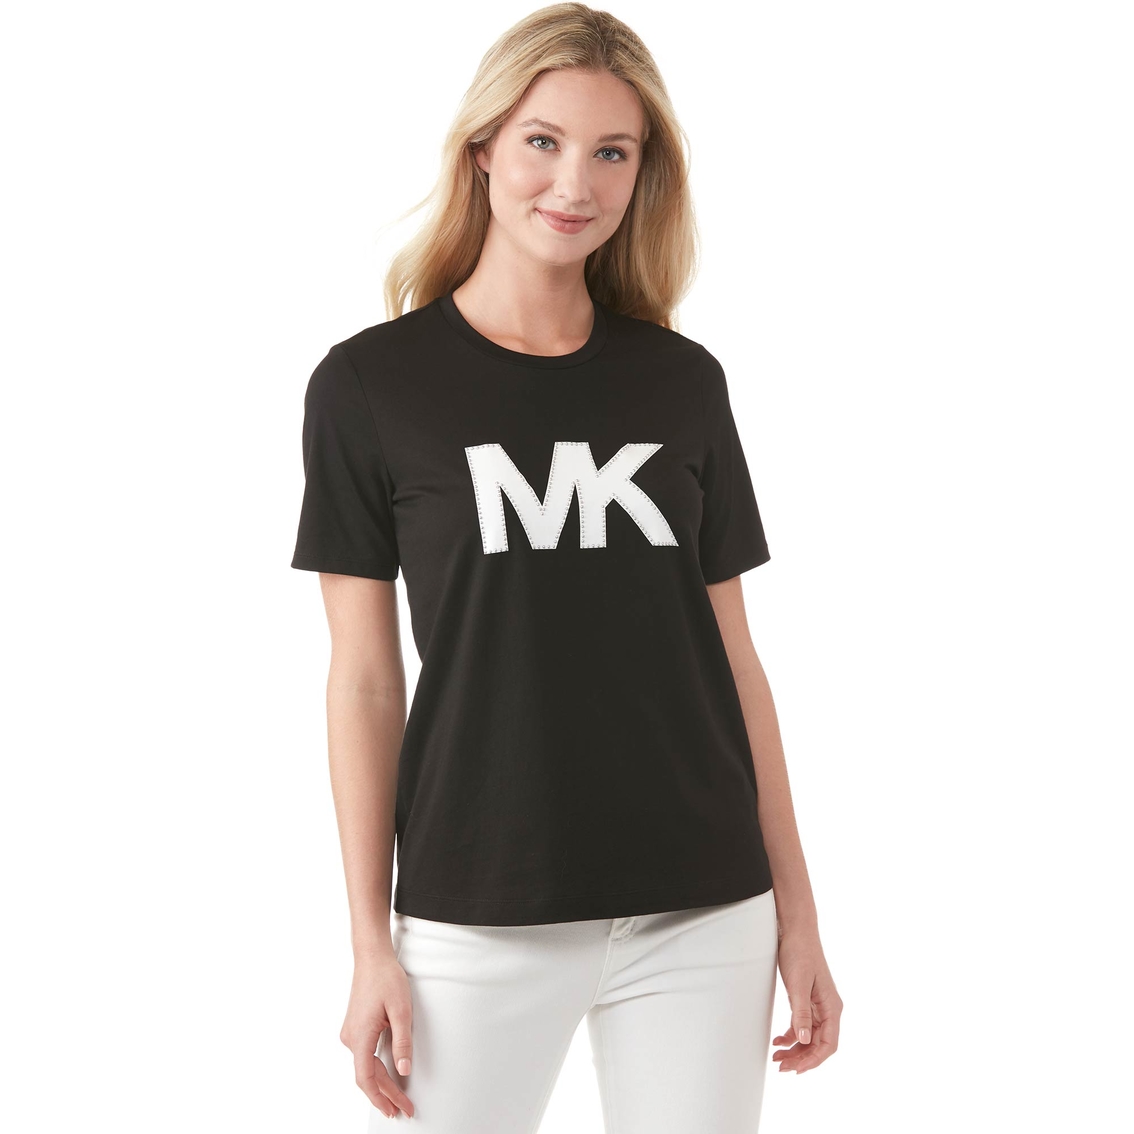 Mk Logo Shirts Top Sellers, UP TO 66% OFF | www.editorialelpirata.com